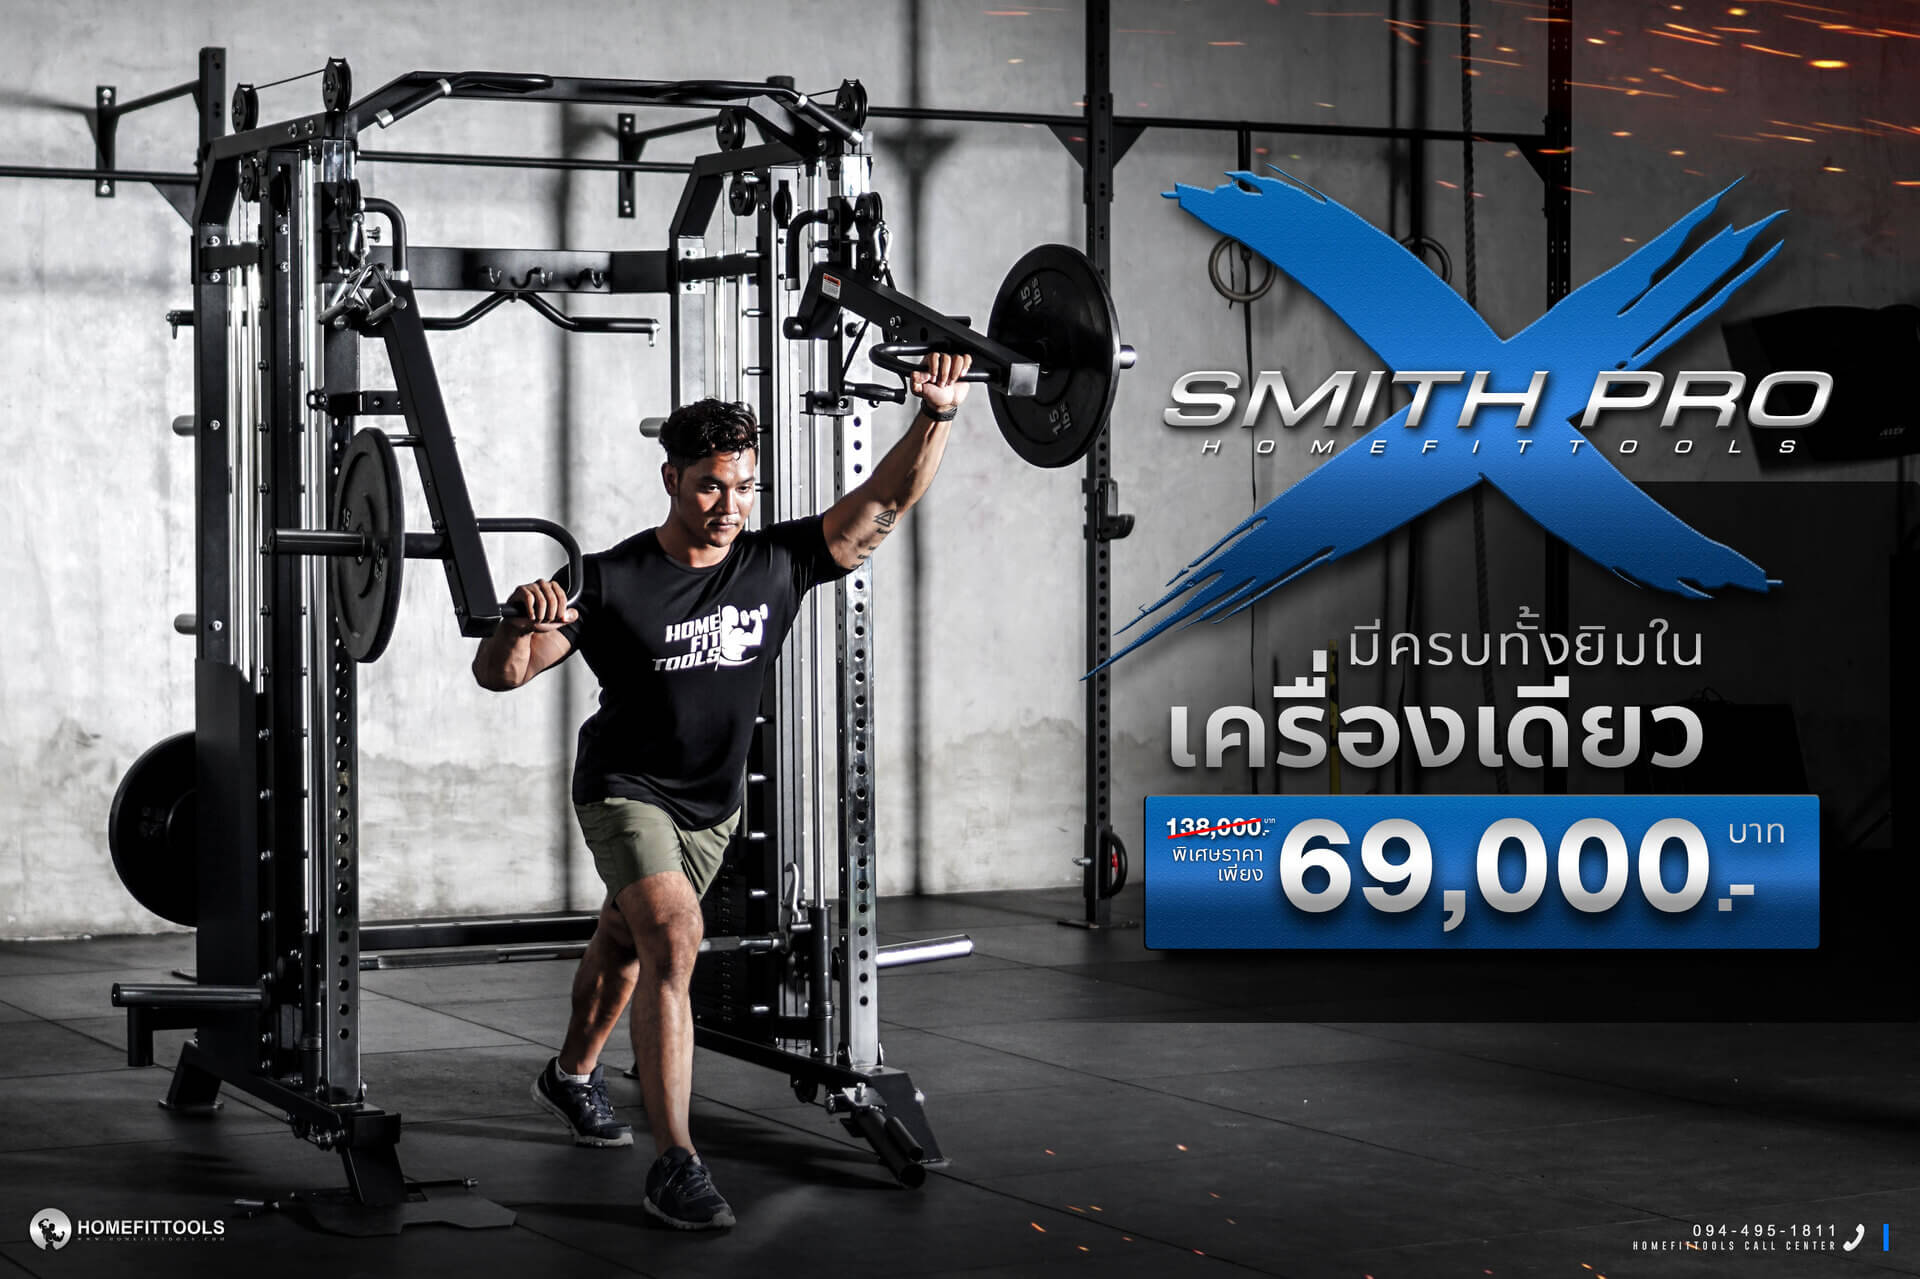 Smithmachine prox สมิทแมชชีน pro-x Home gym ชุดโฮมยิม ออกกำลังกาย เครื่องออกกำลังกาย อุปกรณ์ฟิตเนส Homefittools